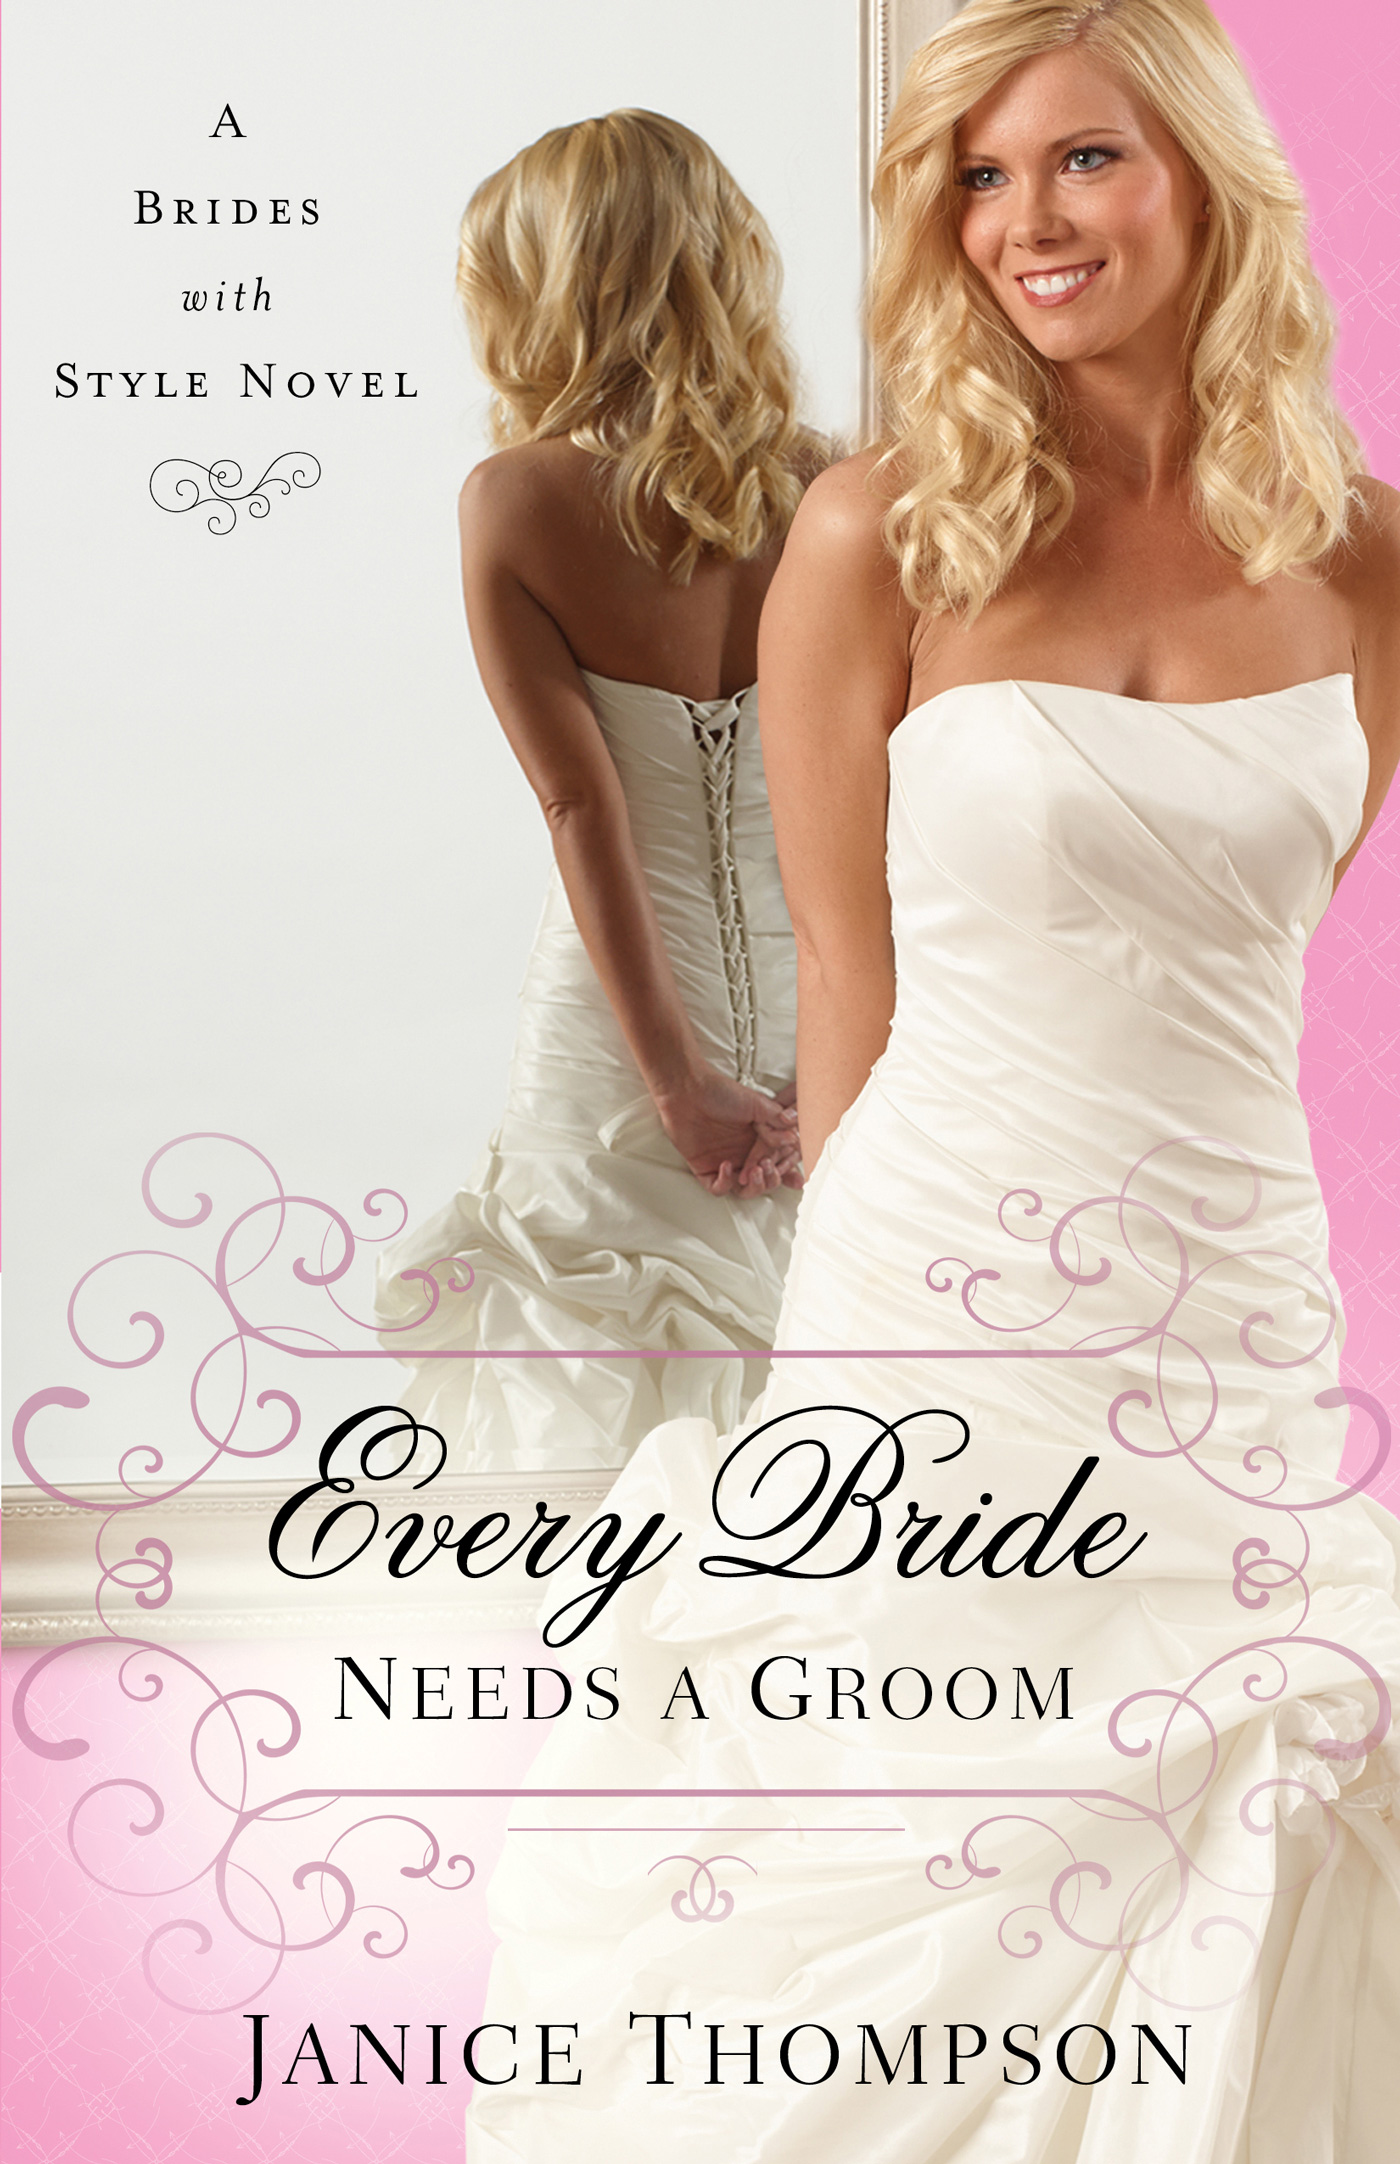 Every Bride Needs a Groom (2015) by Janice  Thompson